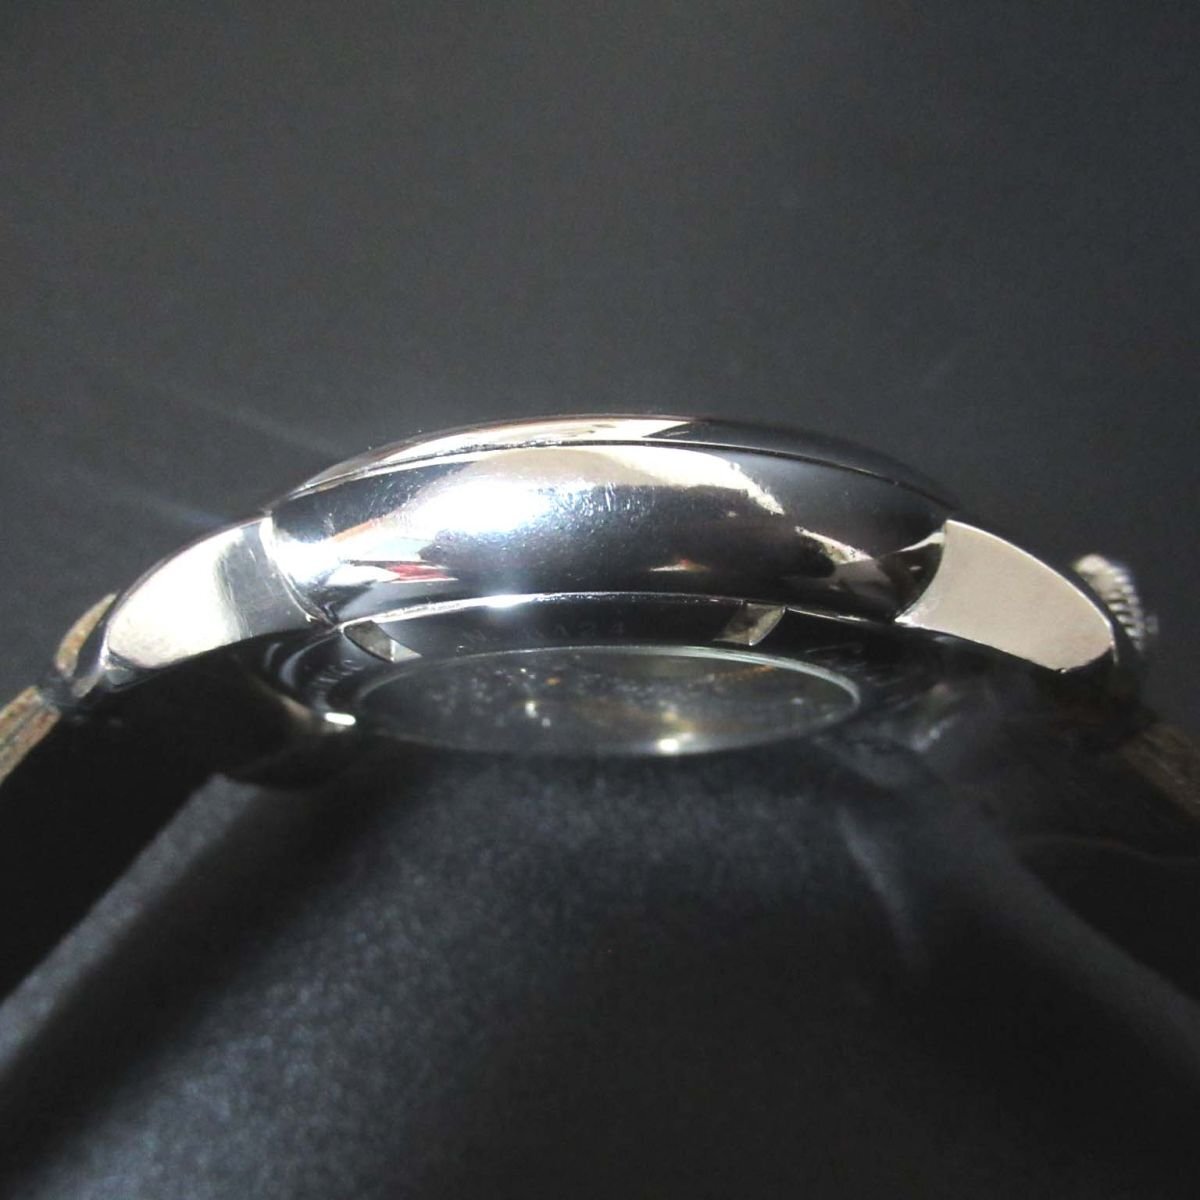  beautiful goods GaGa MILANO GaGa Milano mana-re48 hand winding type men's watch wristwatch N.8424 white face × gray leather belt 